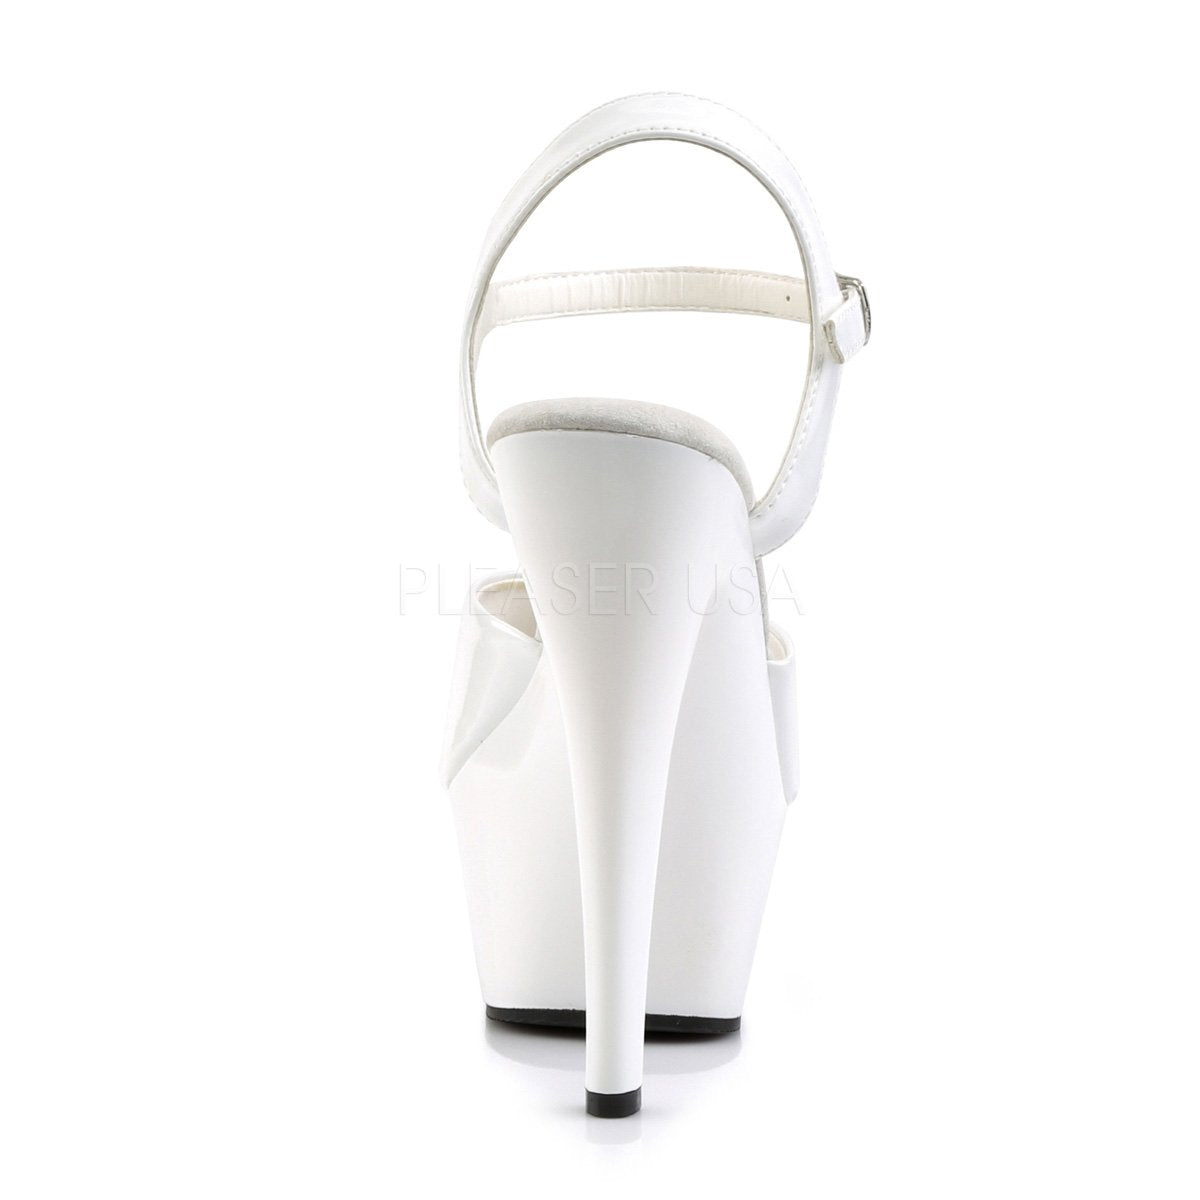 KISS-209 White Patent Heels-Pleaser-Tragic Beautiful